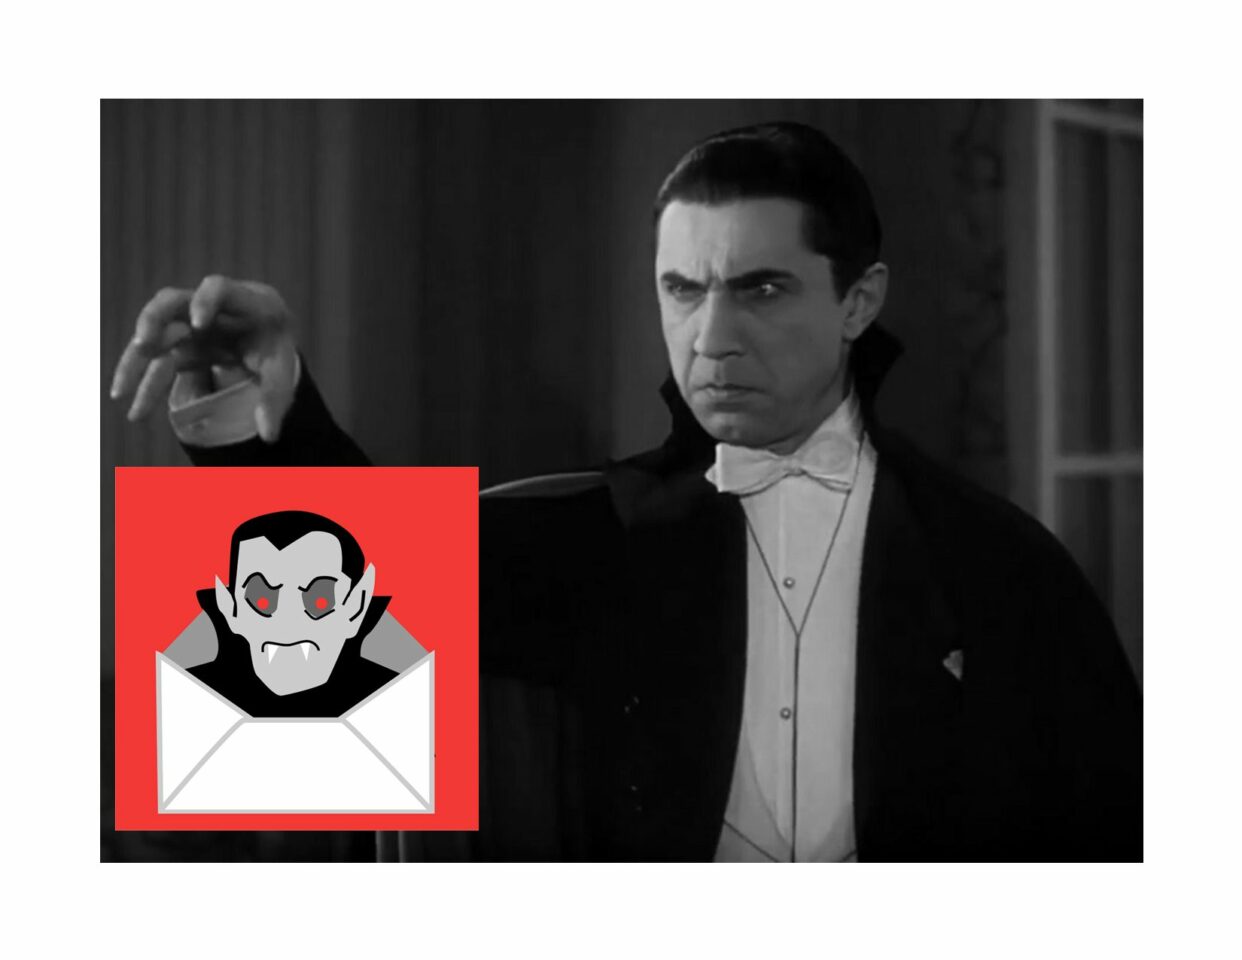 Bela Lugosi as Dracula, with the Dracula Daily logo